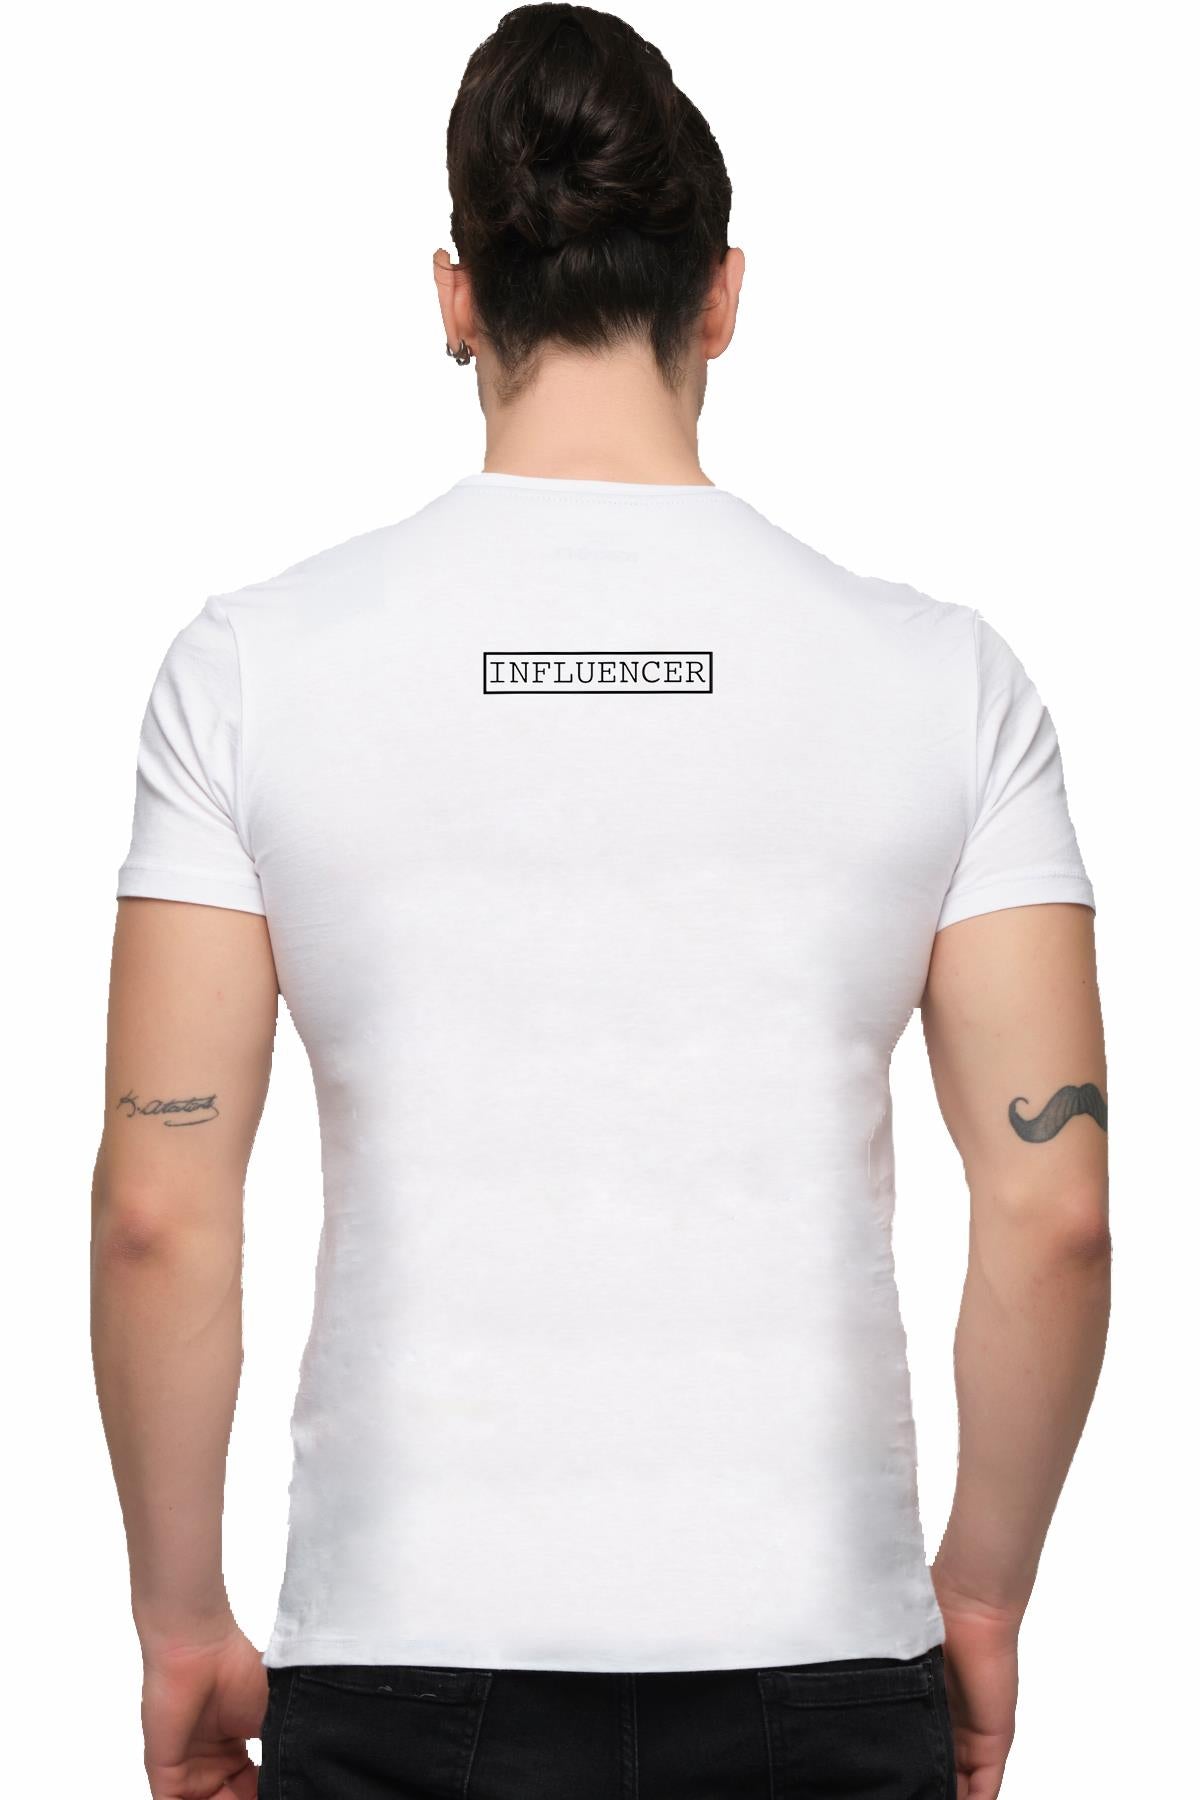 Back Influencer Printed Cotton Men's T -shirt